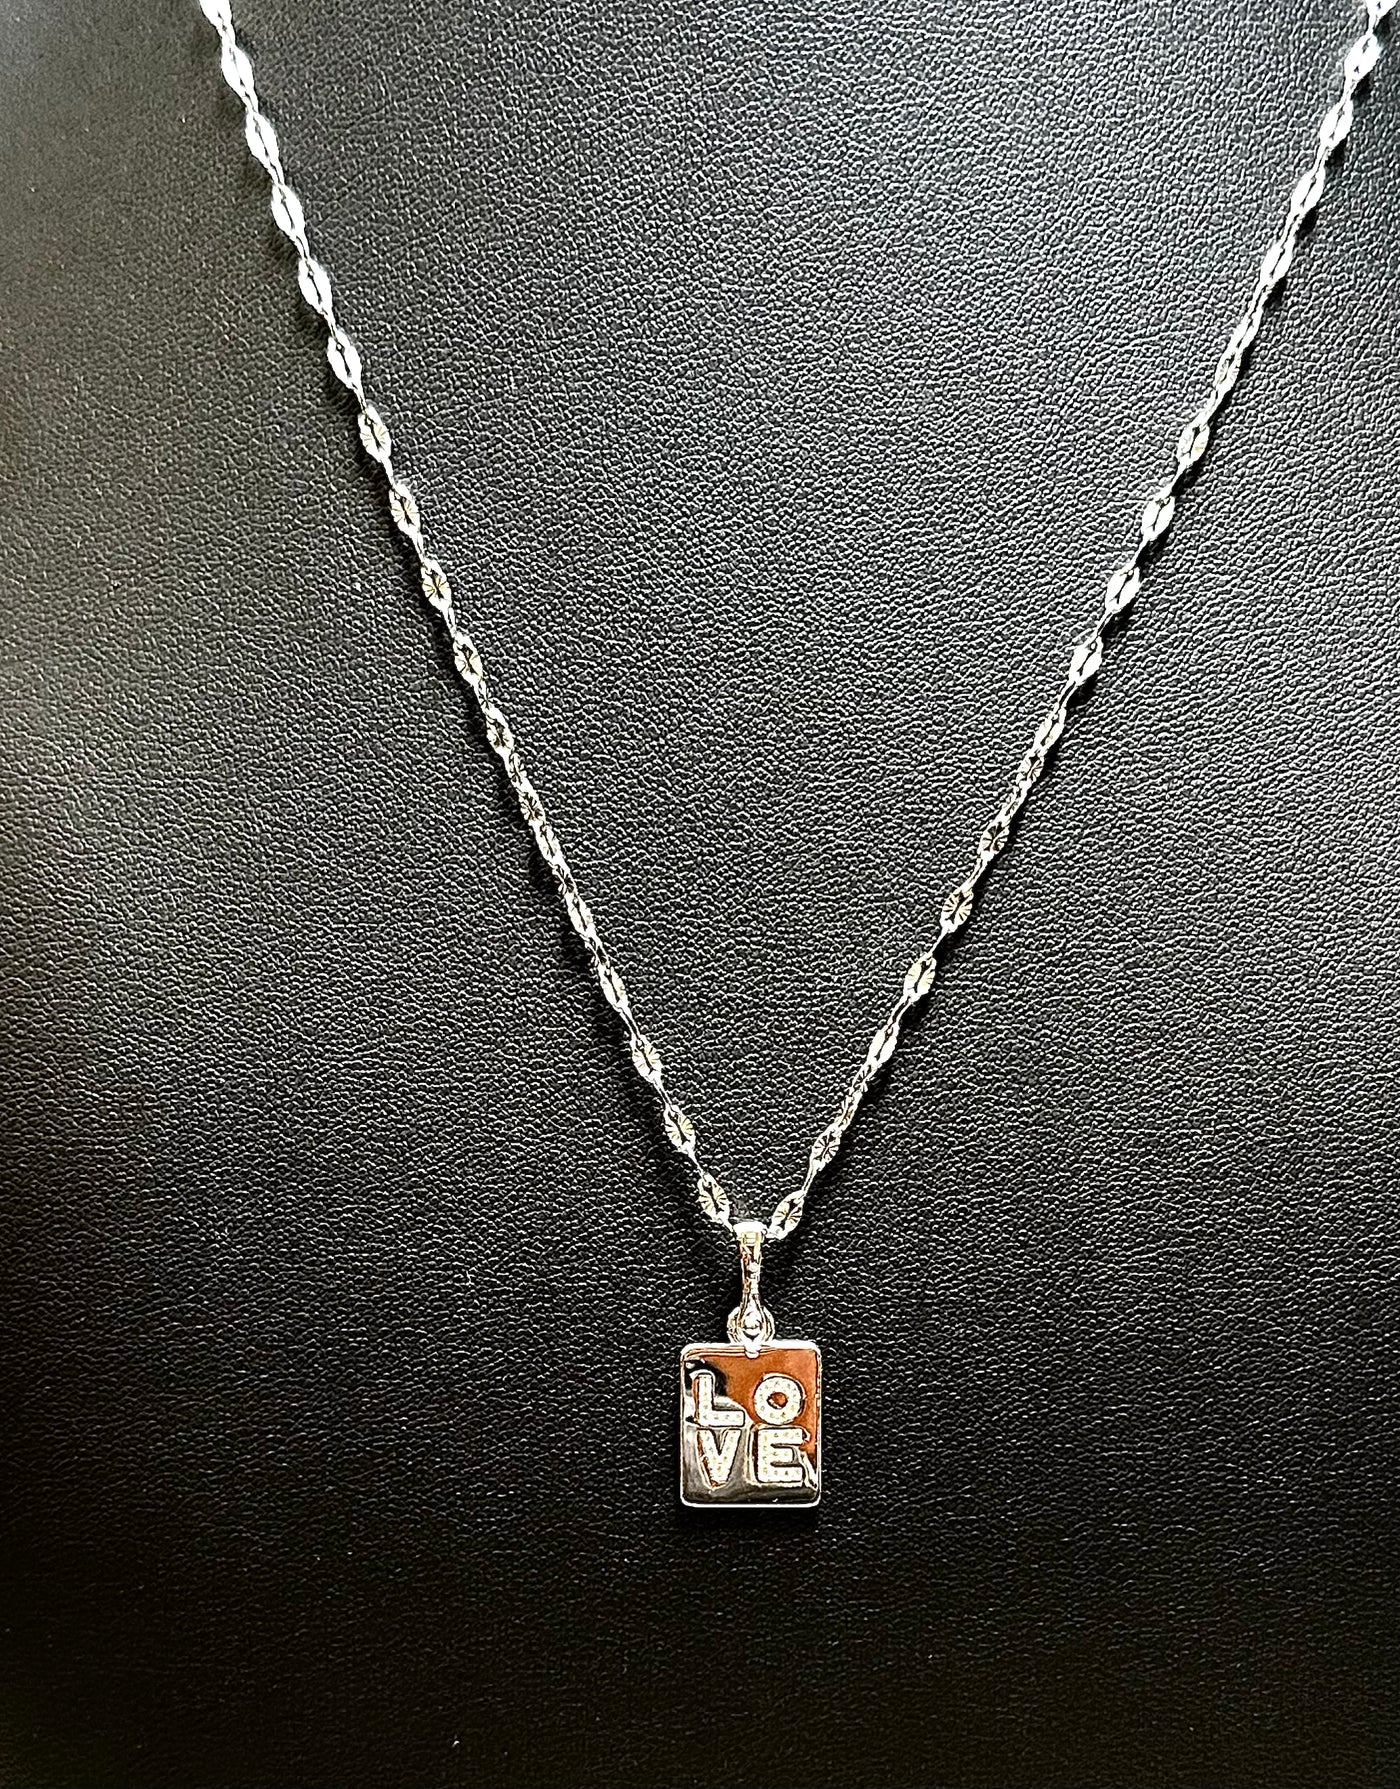 Women's Stainless Steel Love Pendant Necklace - Elegant Romantic Jewelry Gift